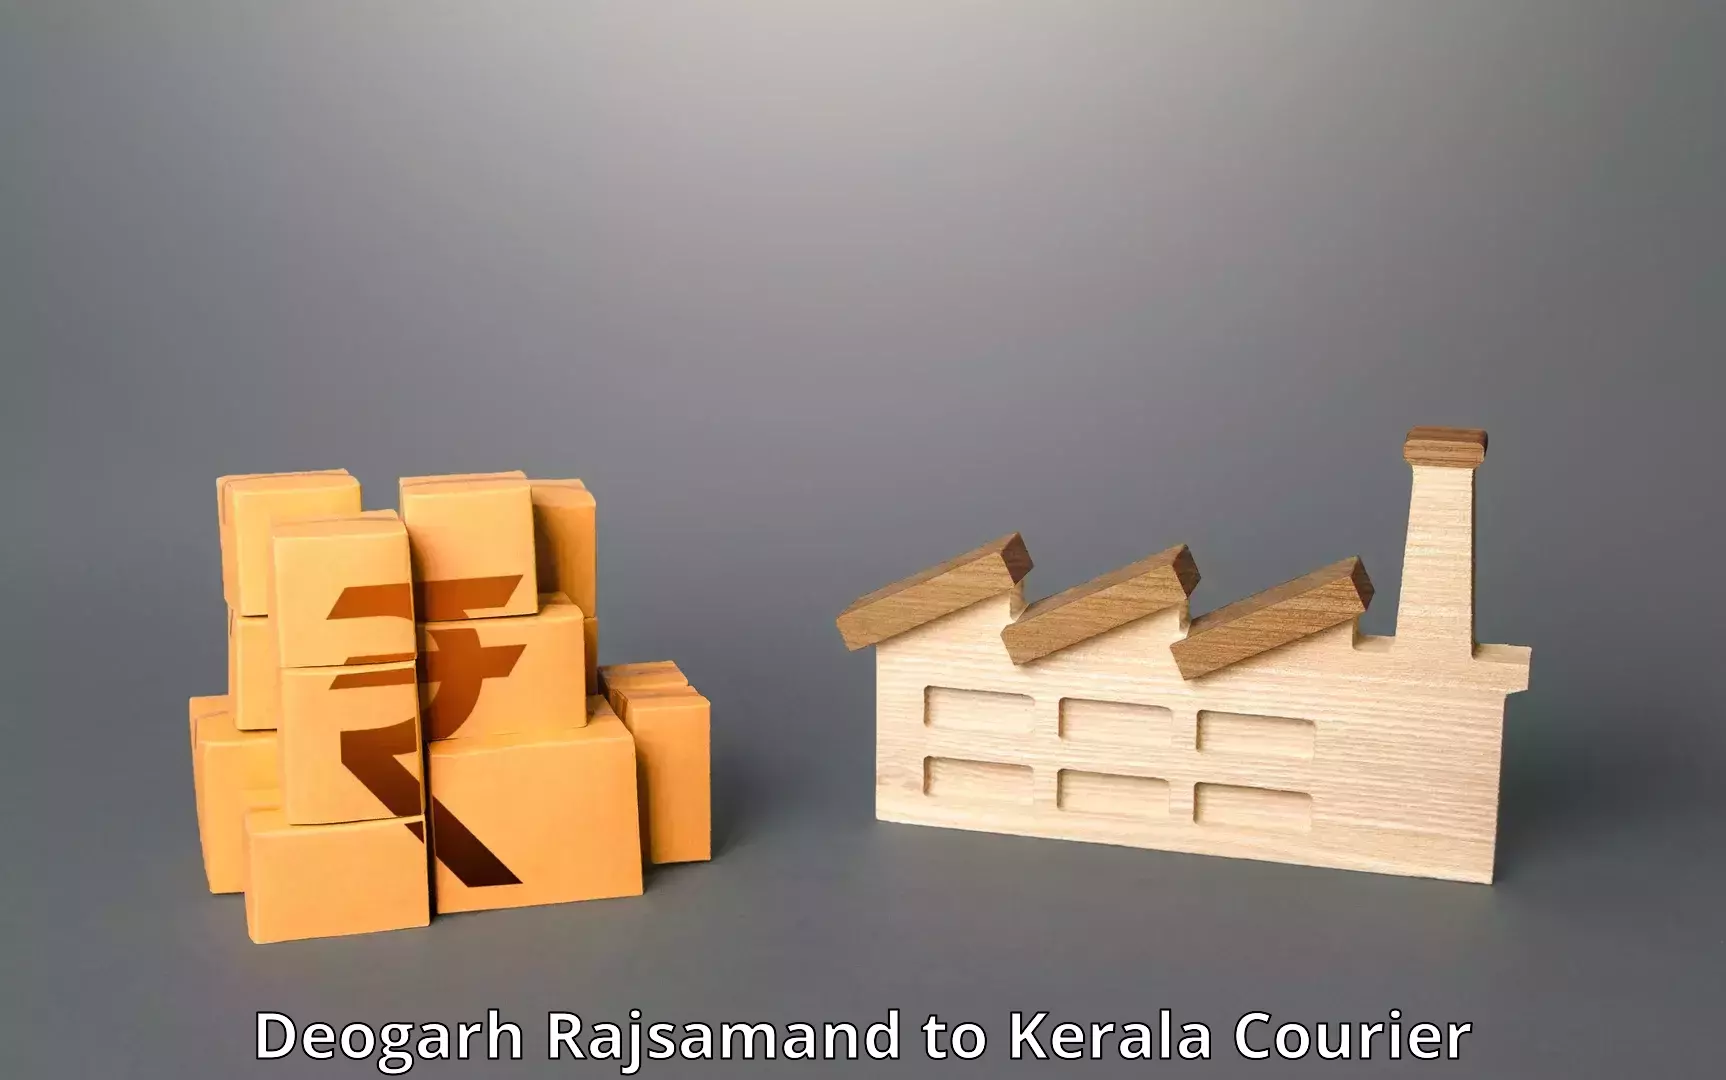 Multi-city courier Deogarh Rajsamand to Kerala